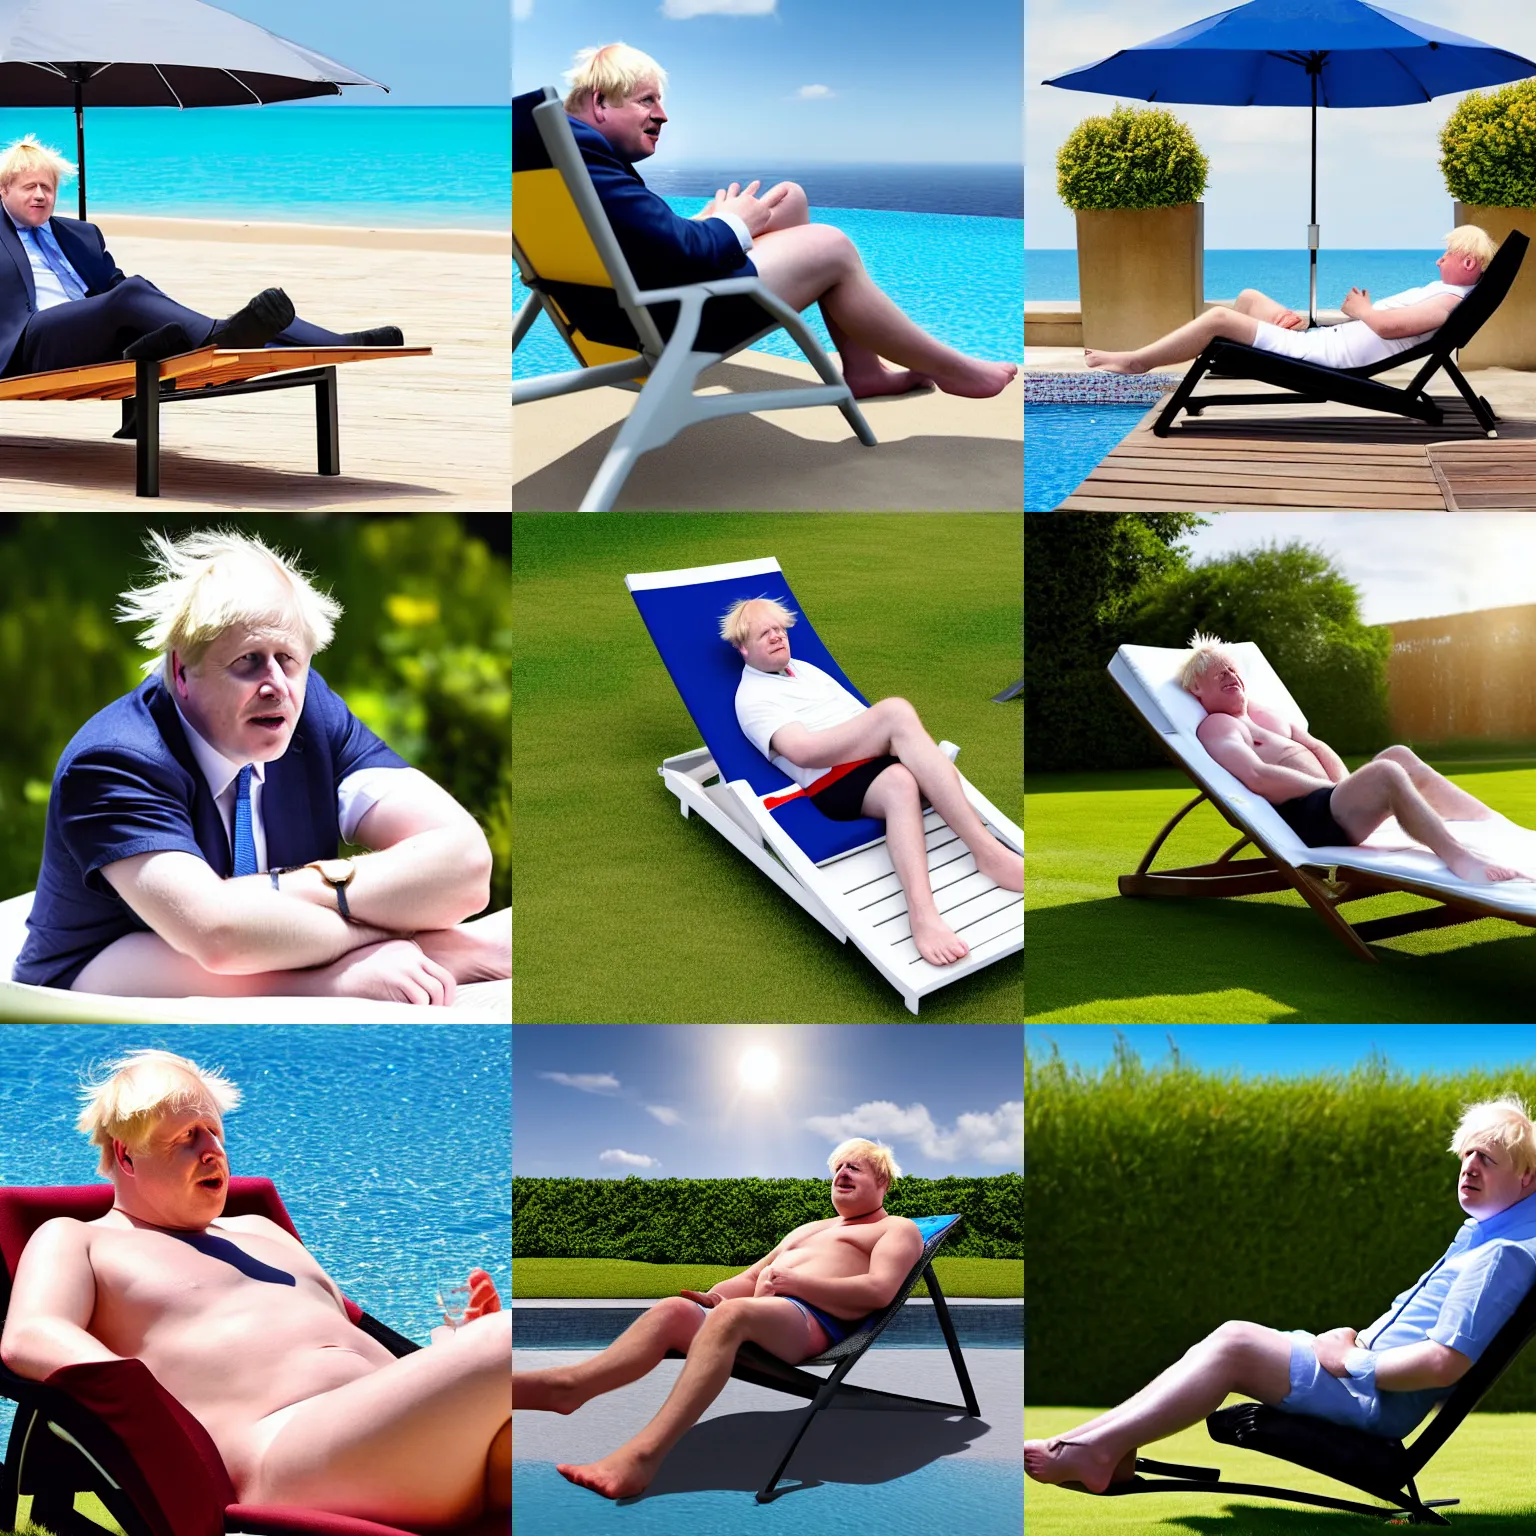 Prompt: Boris Johnson united kingdom prime minister sunbathing on a sun lounger, directed by Ridley Scott, photorealistic, 8k resolution, hyper detail